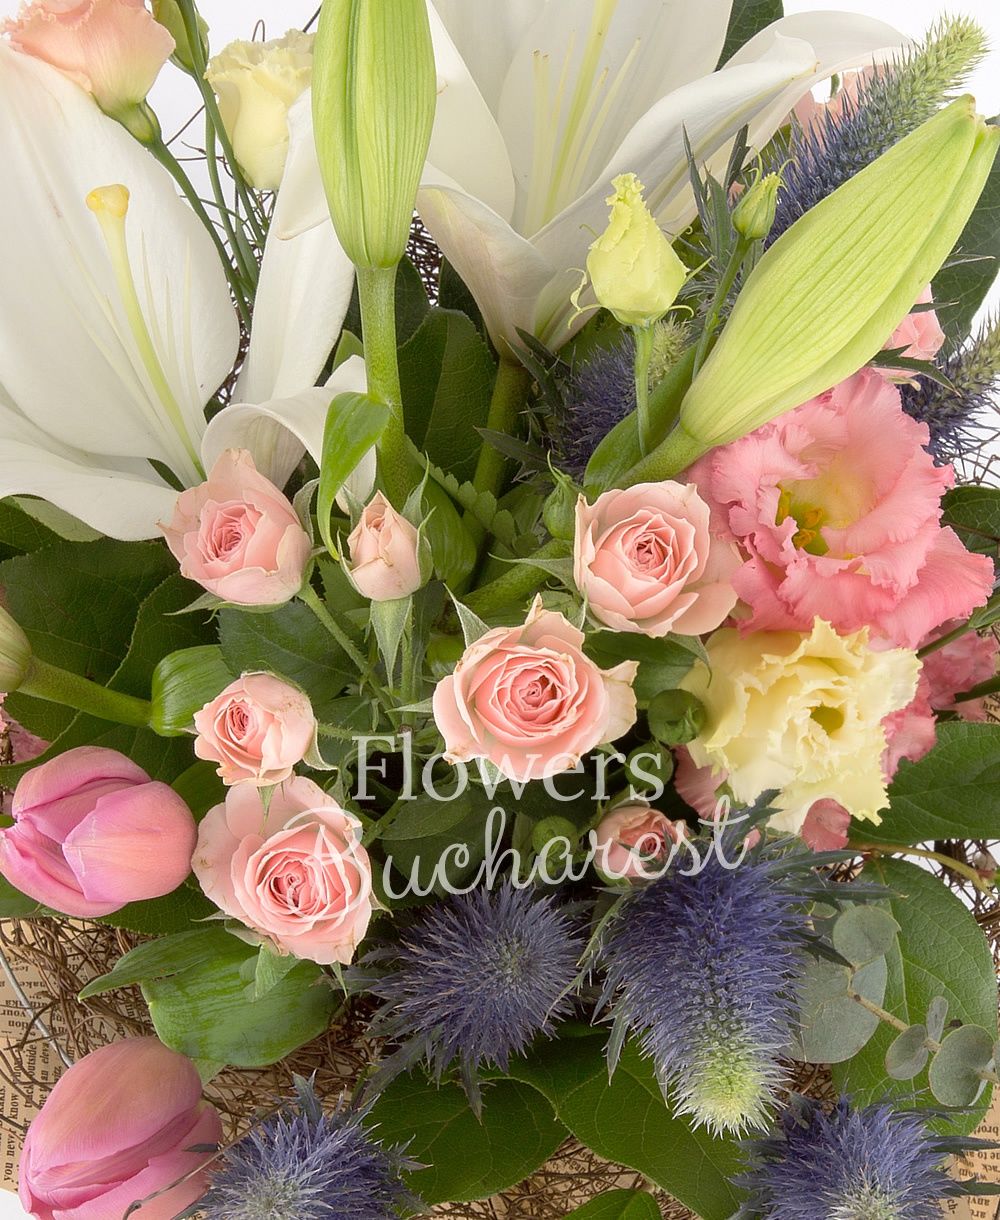 1 white lily, 3 pink minirose, 3 pink lisianthus, 3 eryngium, 5 pink tulips, greenery